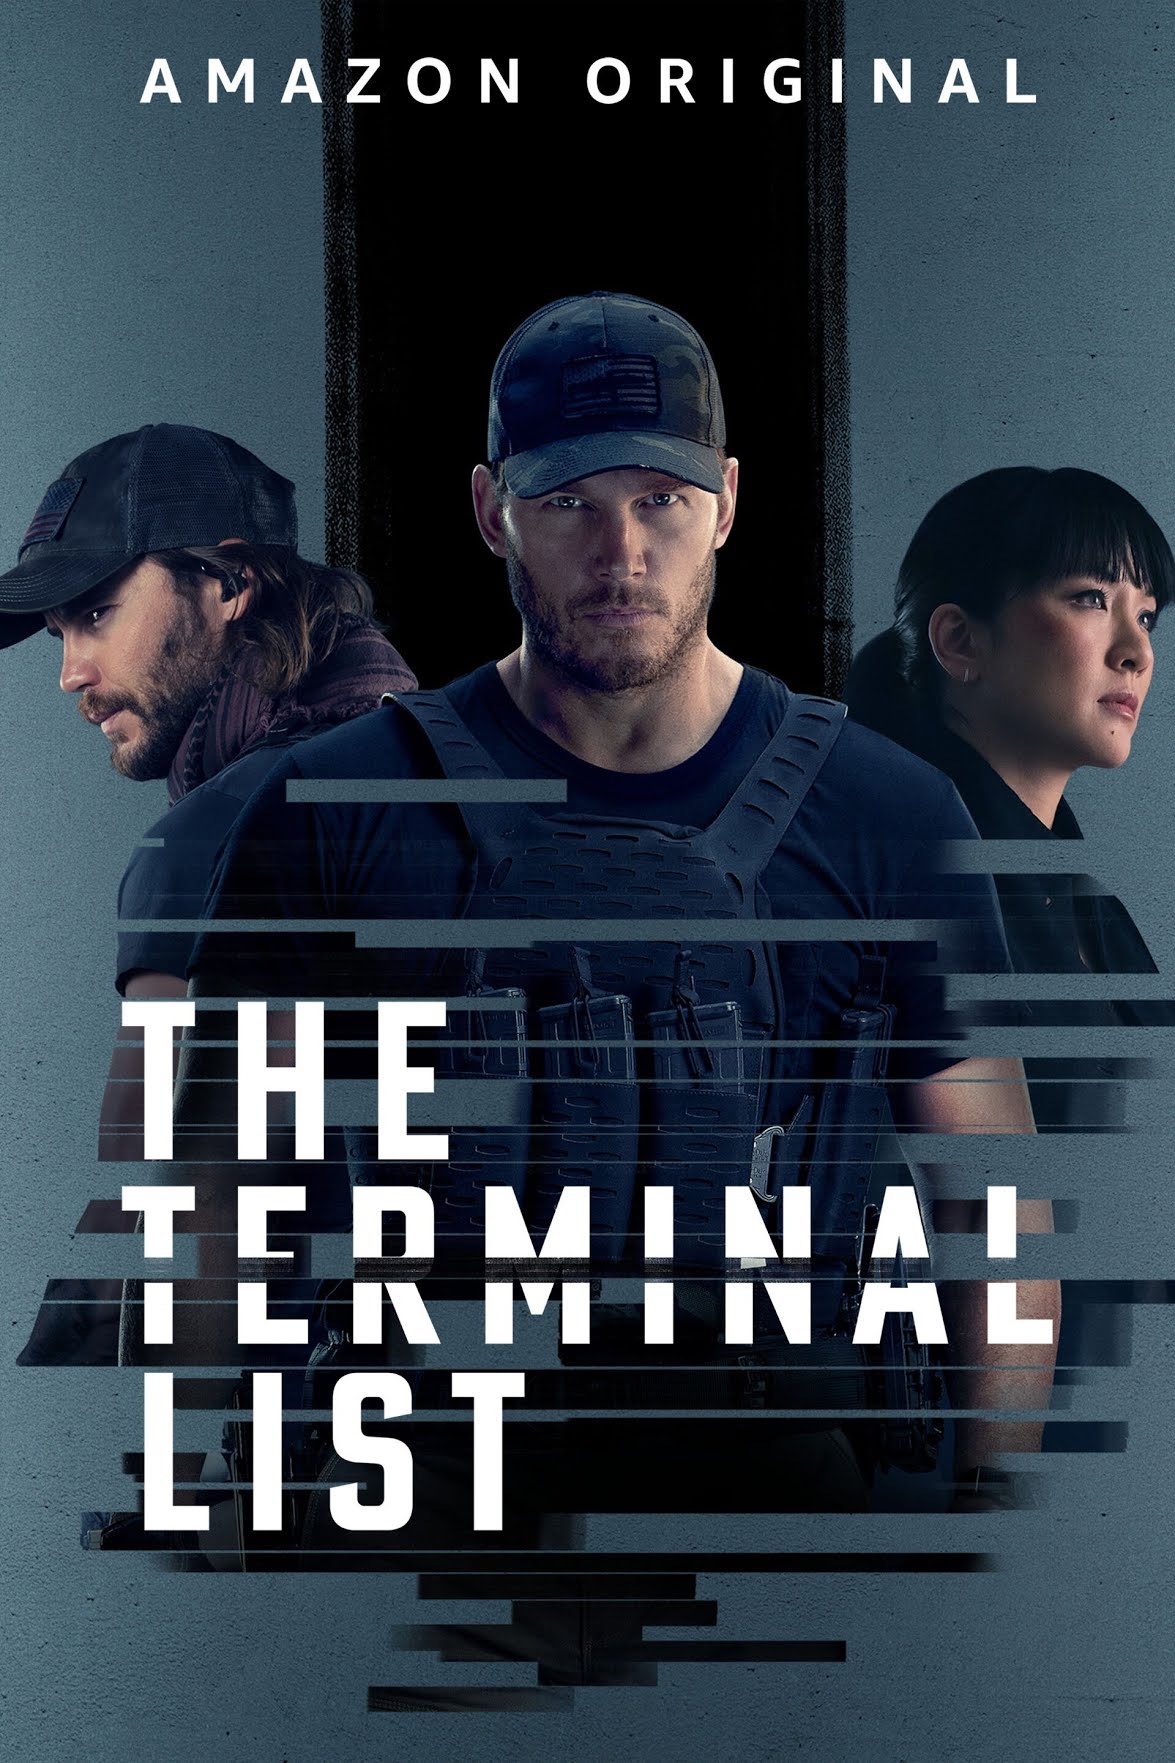 Amazon Original - The Terminal List cover image